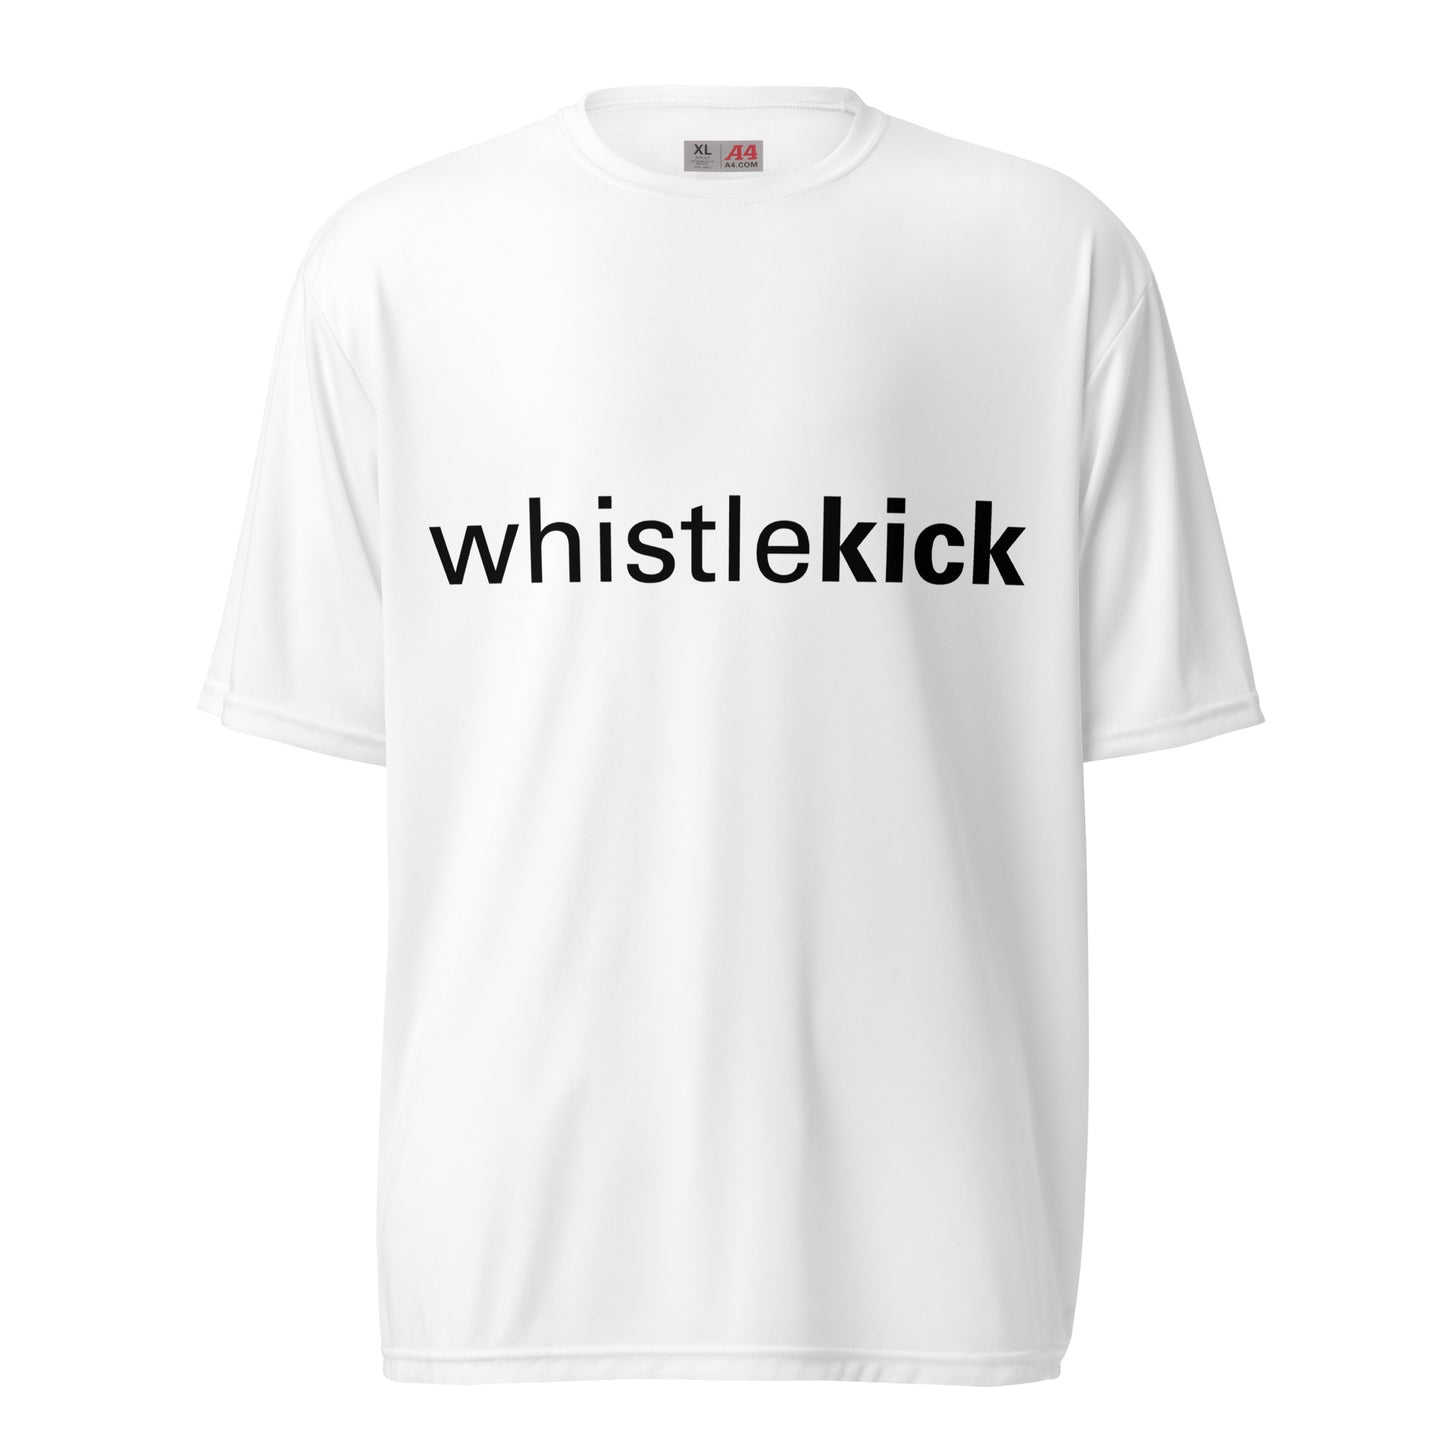 whistlekick dri-fit Tee